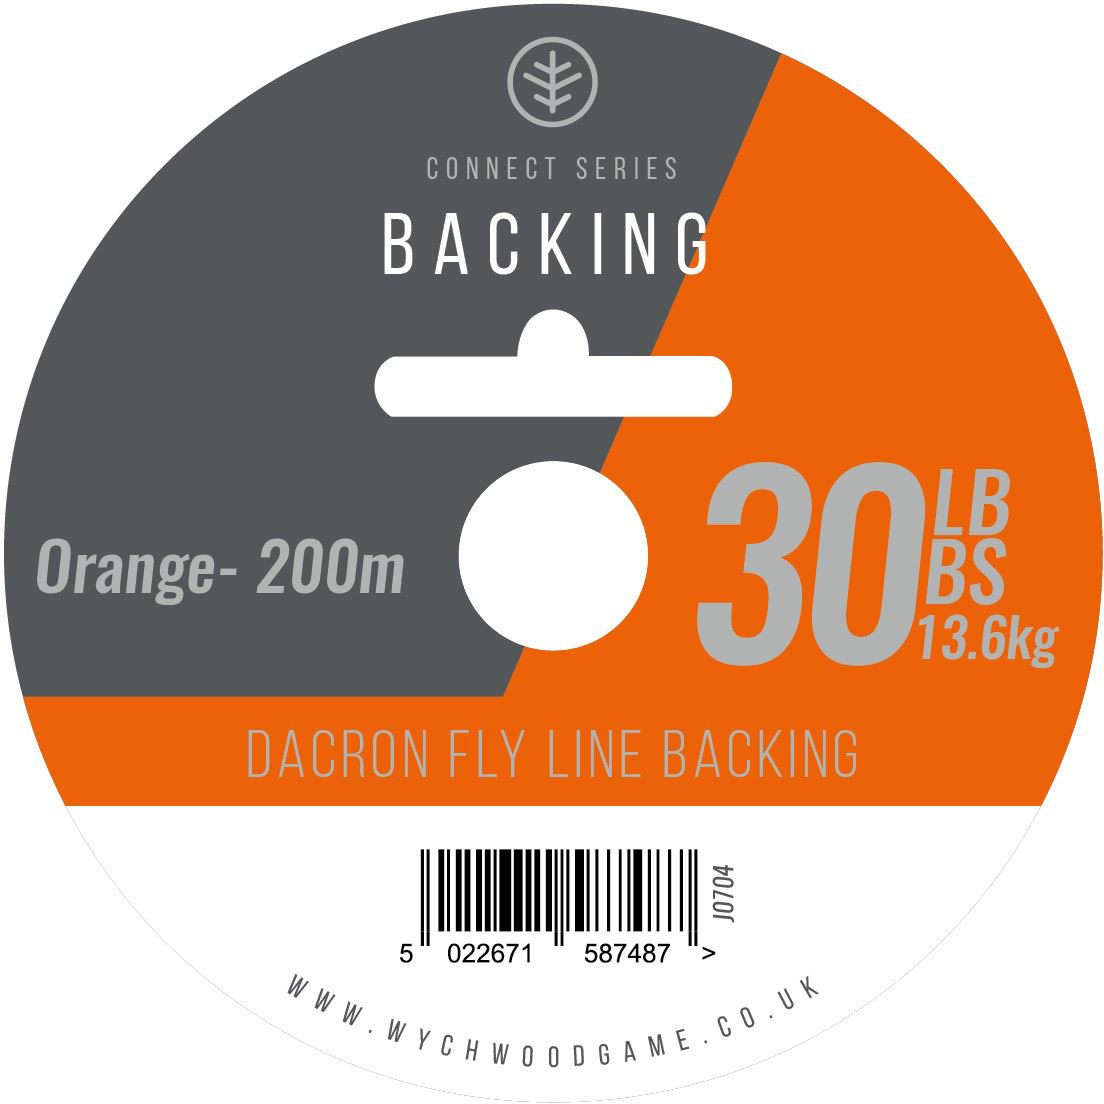 Wychwood Connect Series Backing Line 30LB Orange